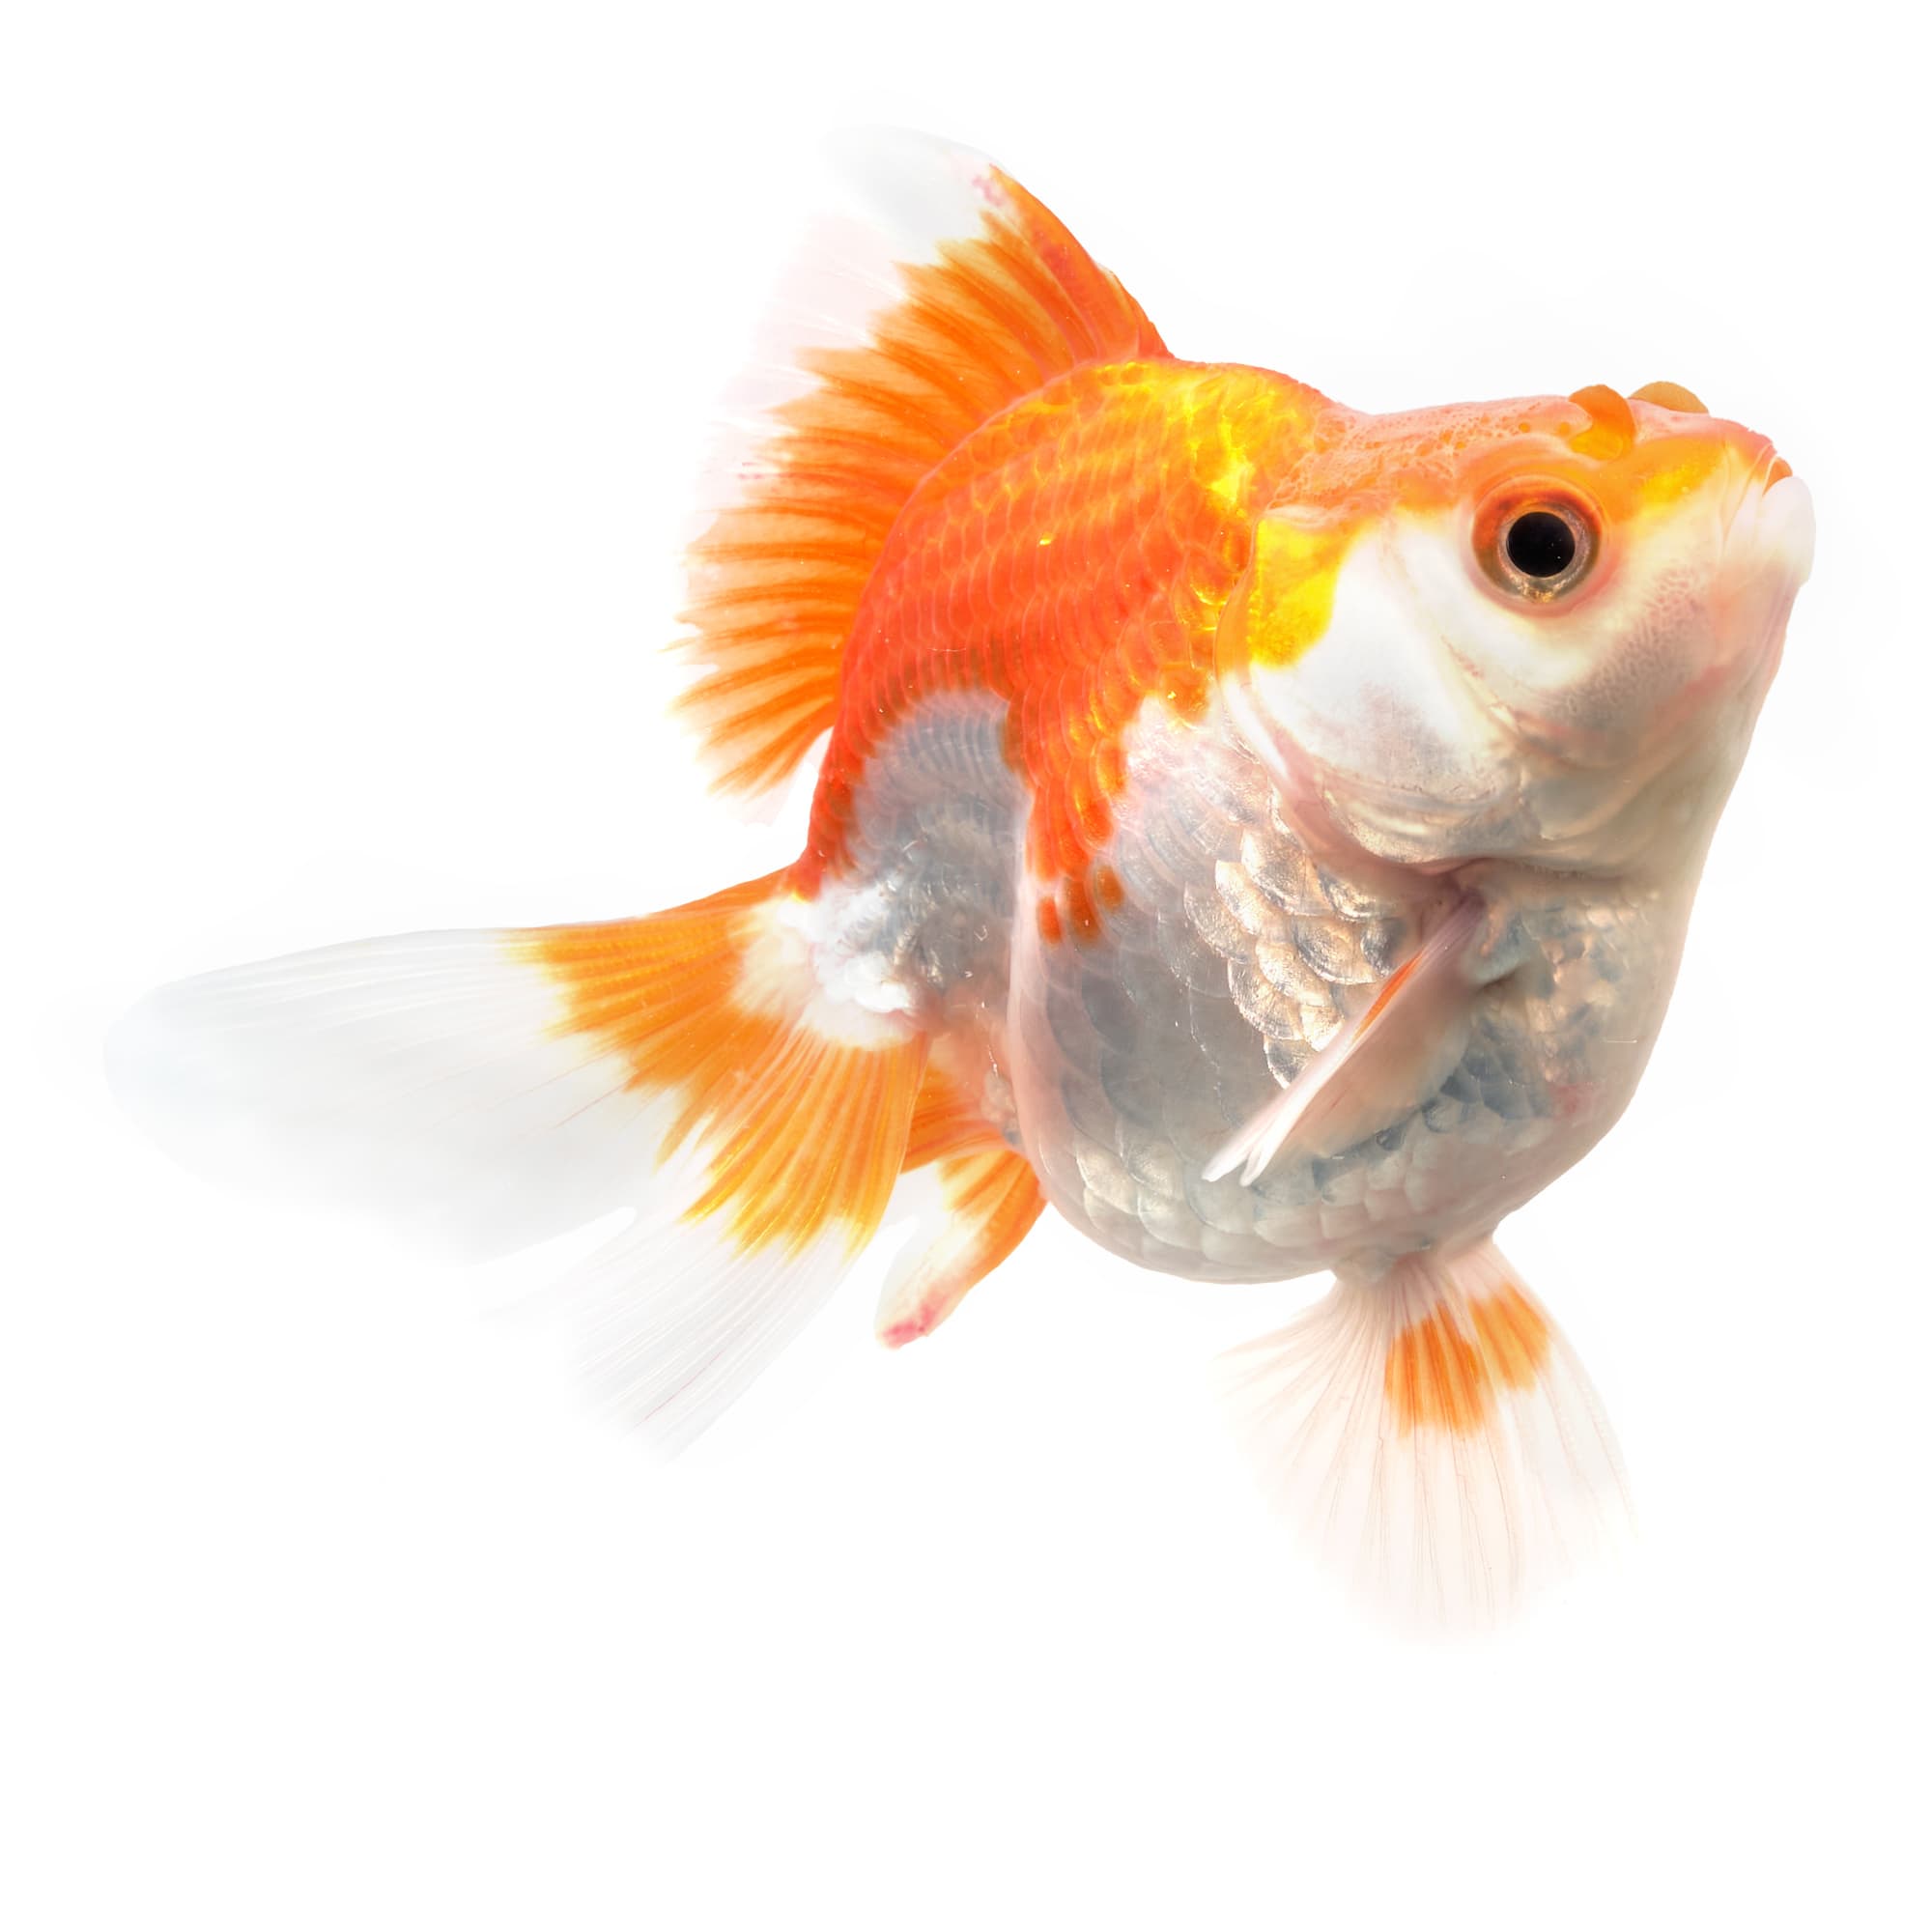 Fancy Goldfish (Carassius auratus)  Ultimate Care Guide - Fish Laboratory